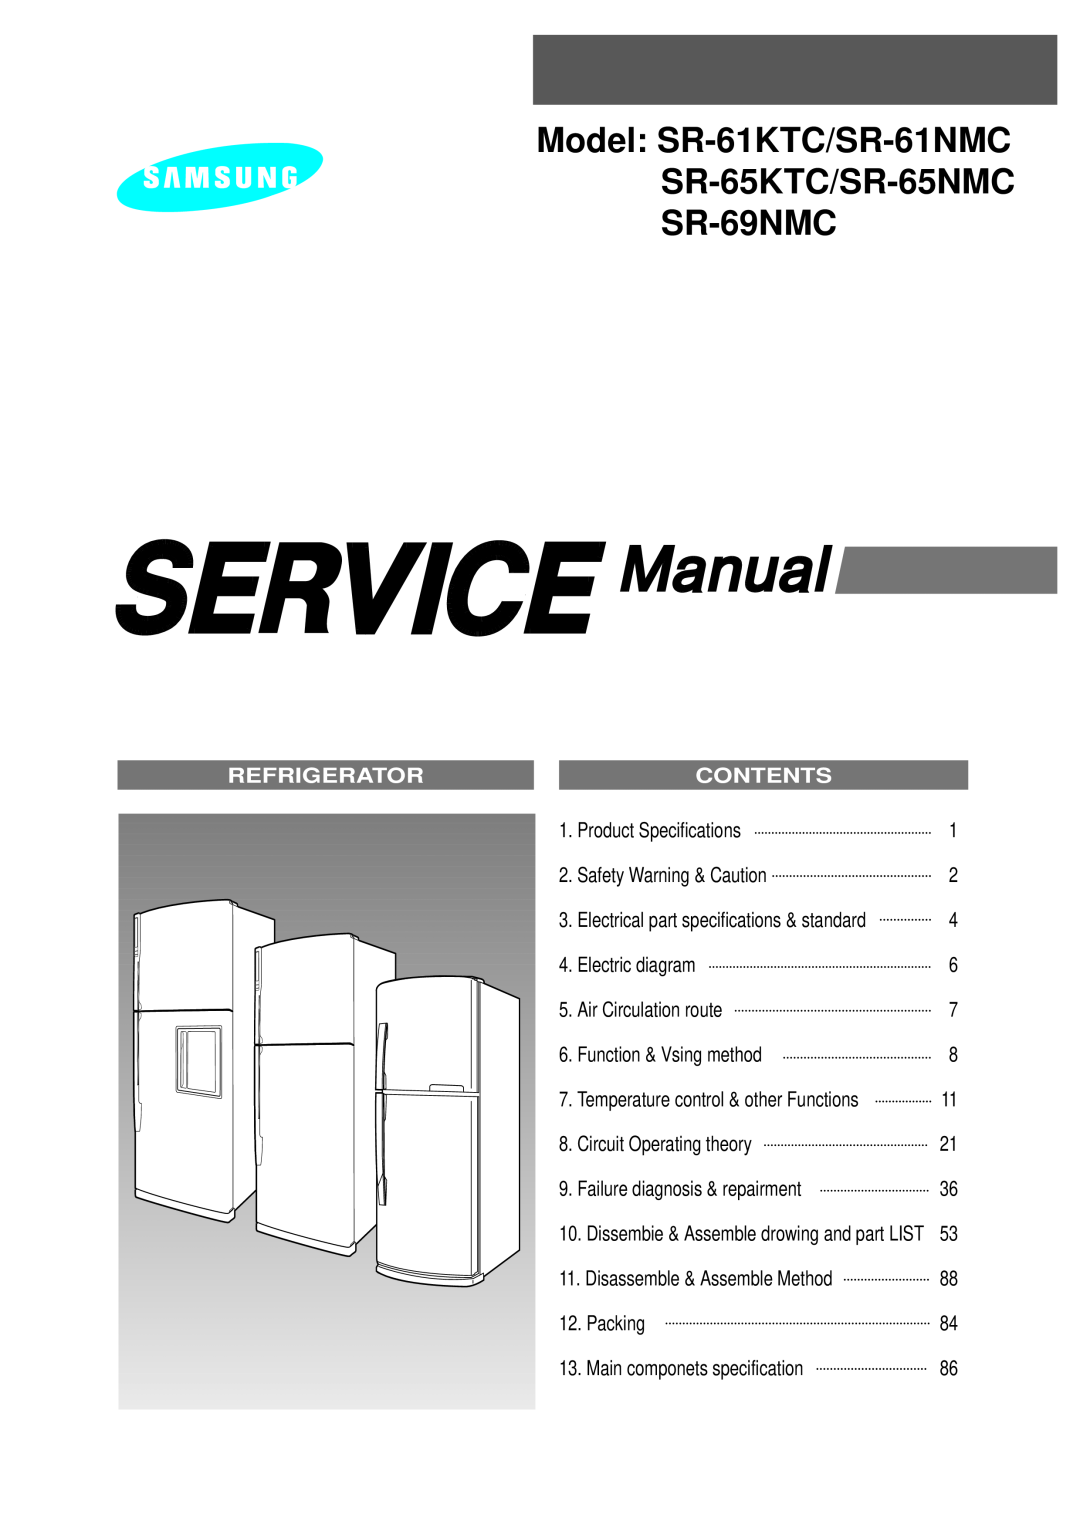 Samsung specifications Model SR-61KTC/SR-61NMC SR-65KTC/SR-65NMC, SR-69NMC, Refrigerator, Contents 